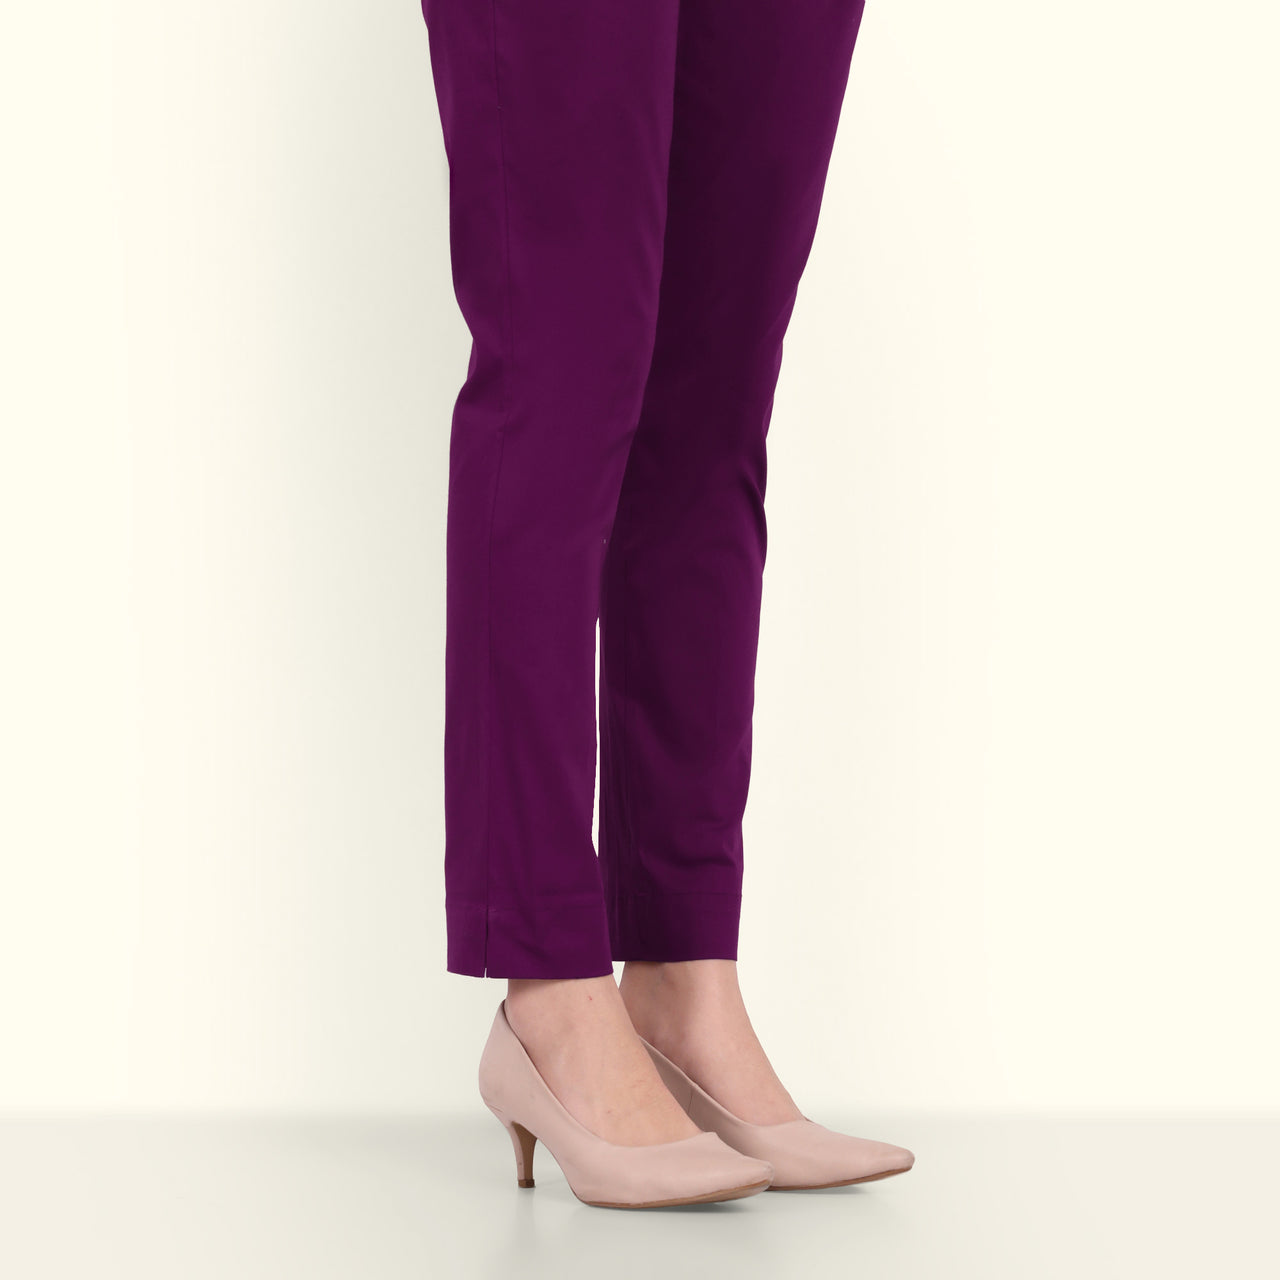 Naariy Purple Stretchable Cotton Pant